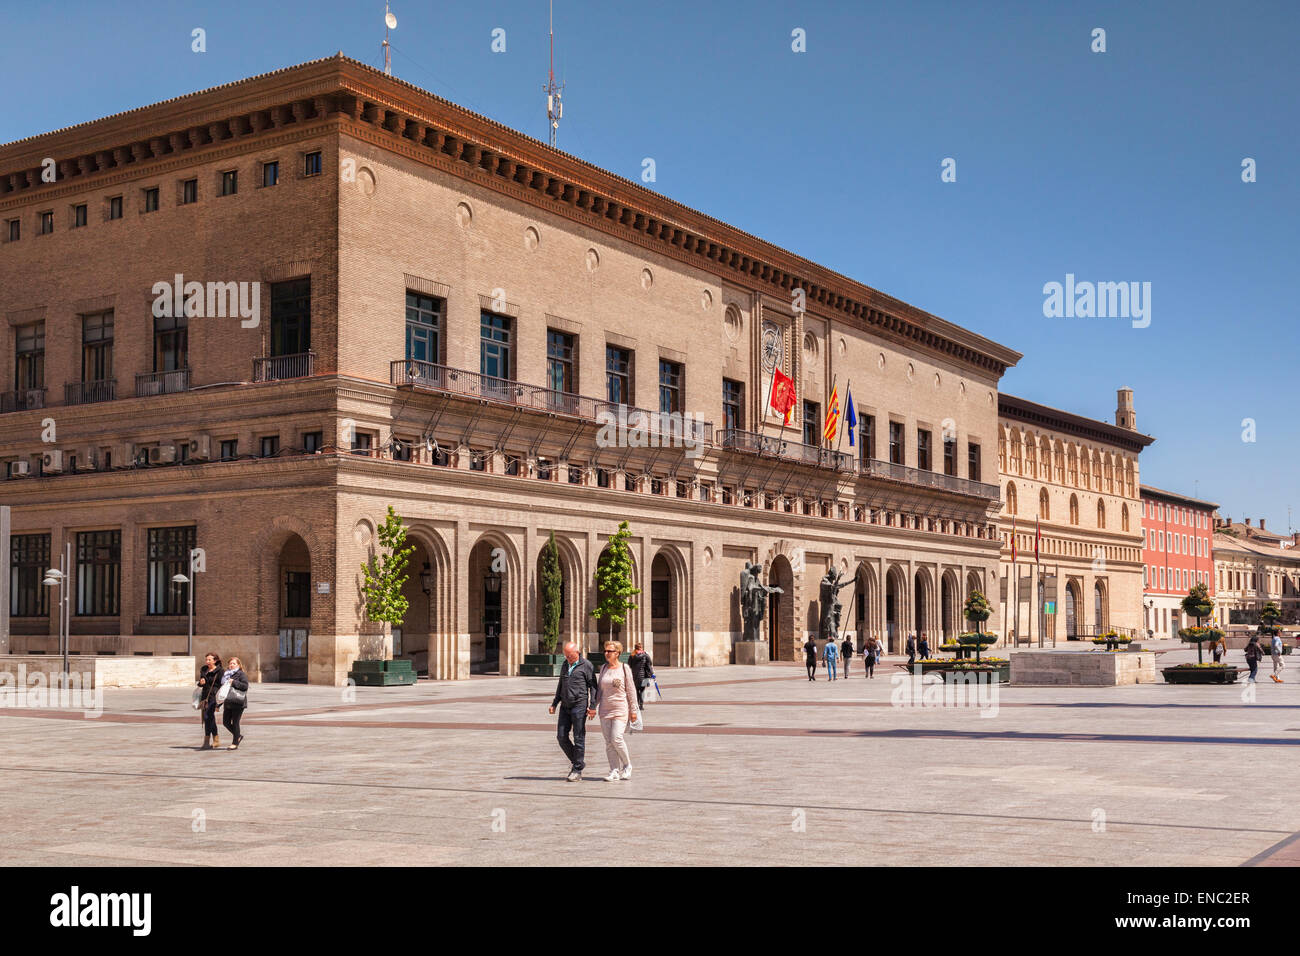 Town Hall, Plaza del Pilar, Zaragoza, Aragon, Spain. Stock Photo